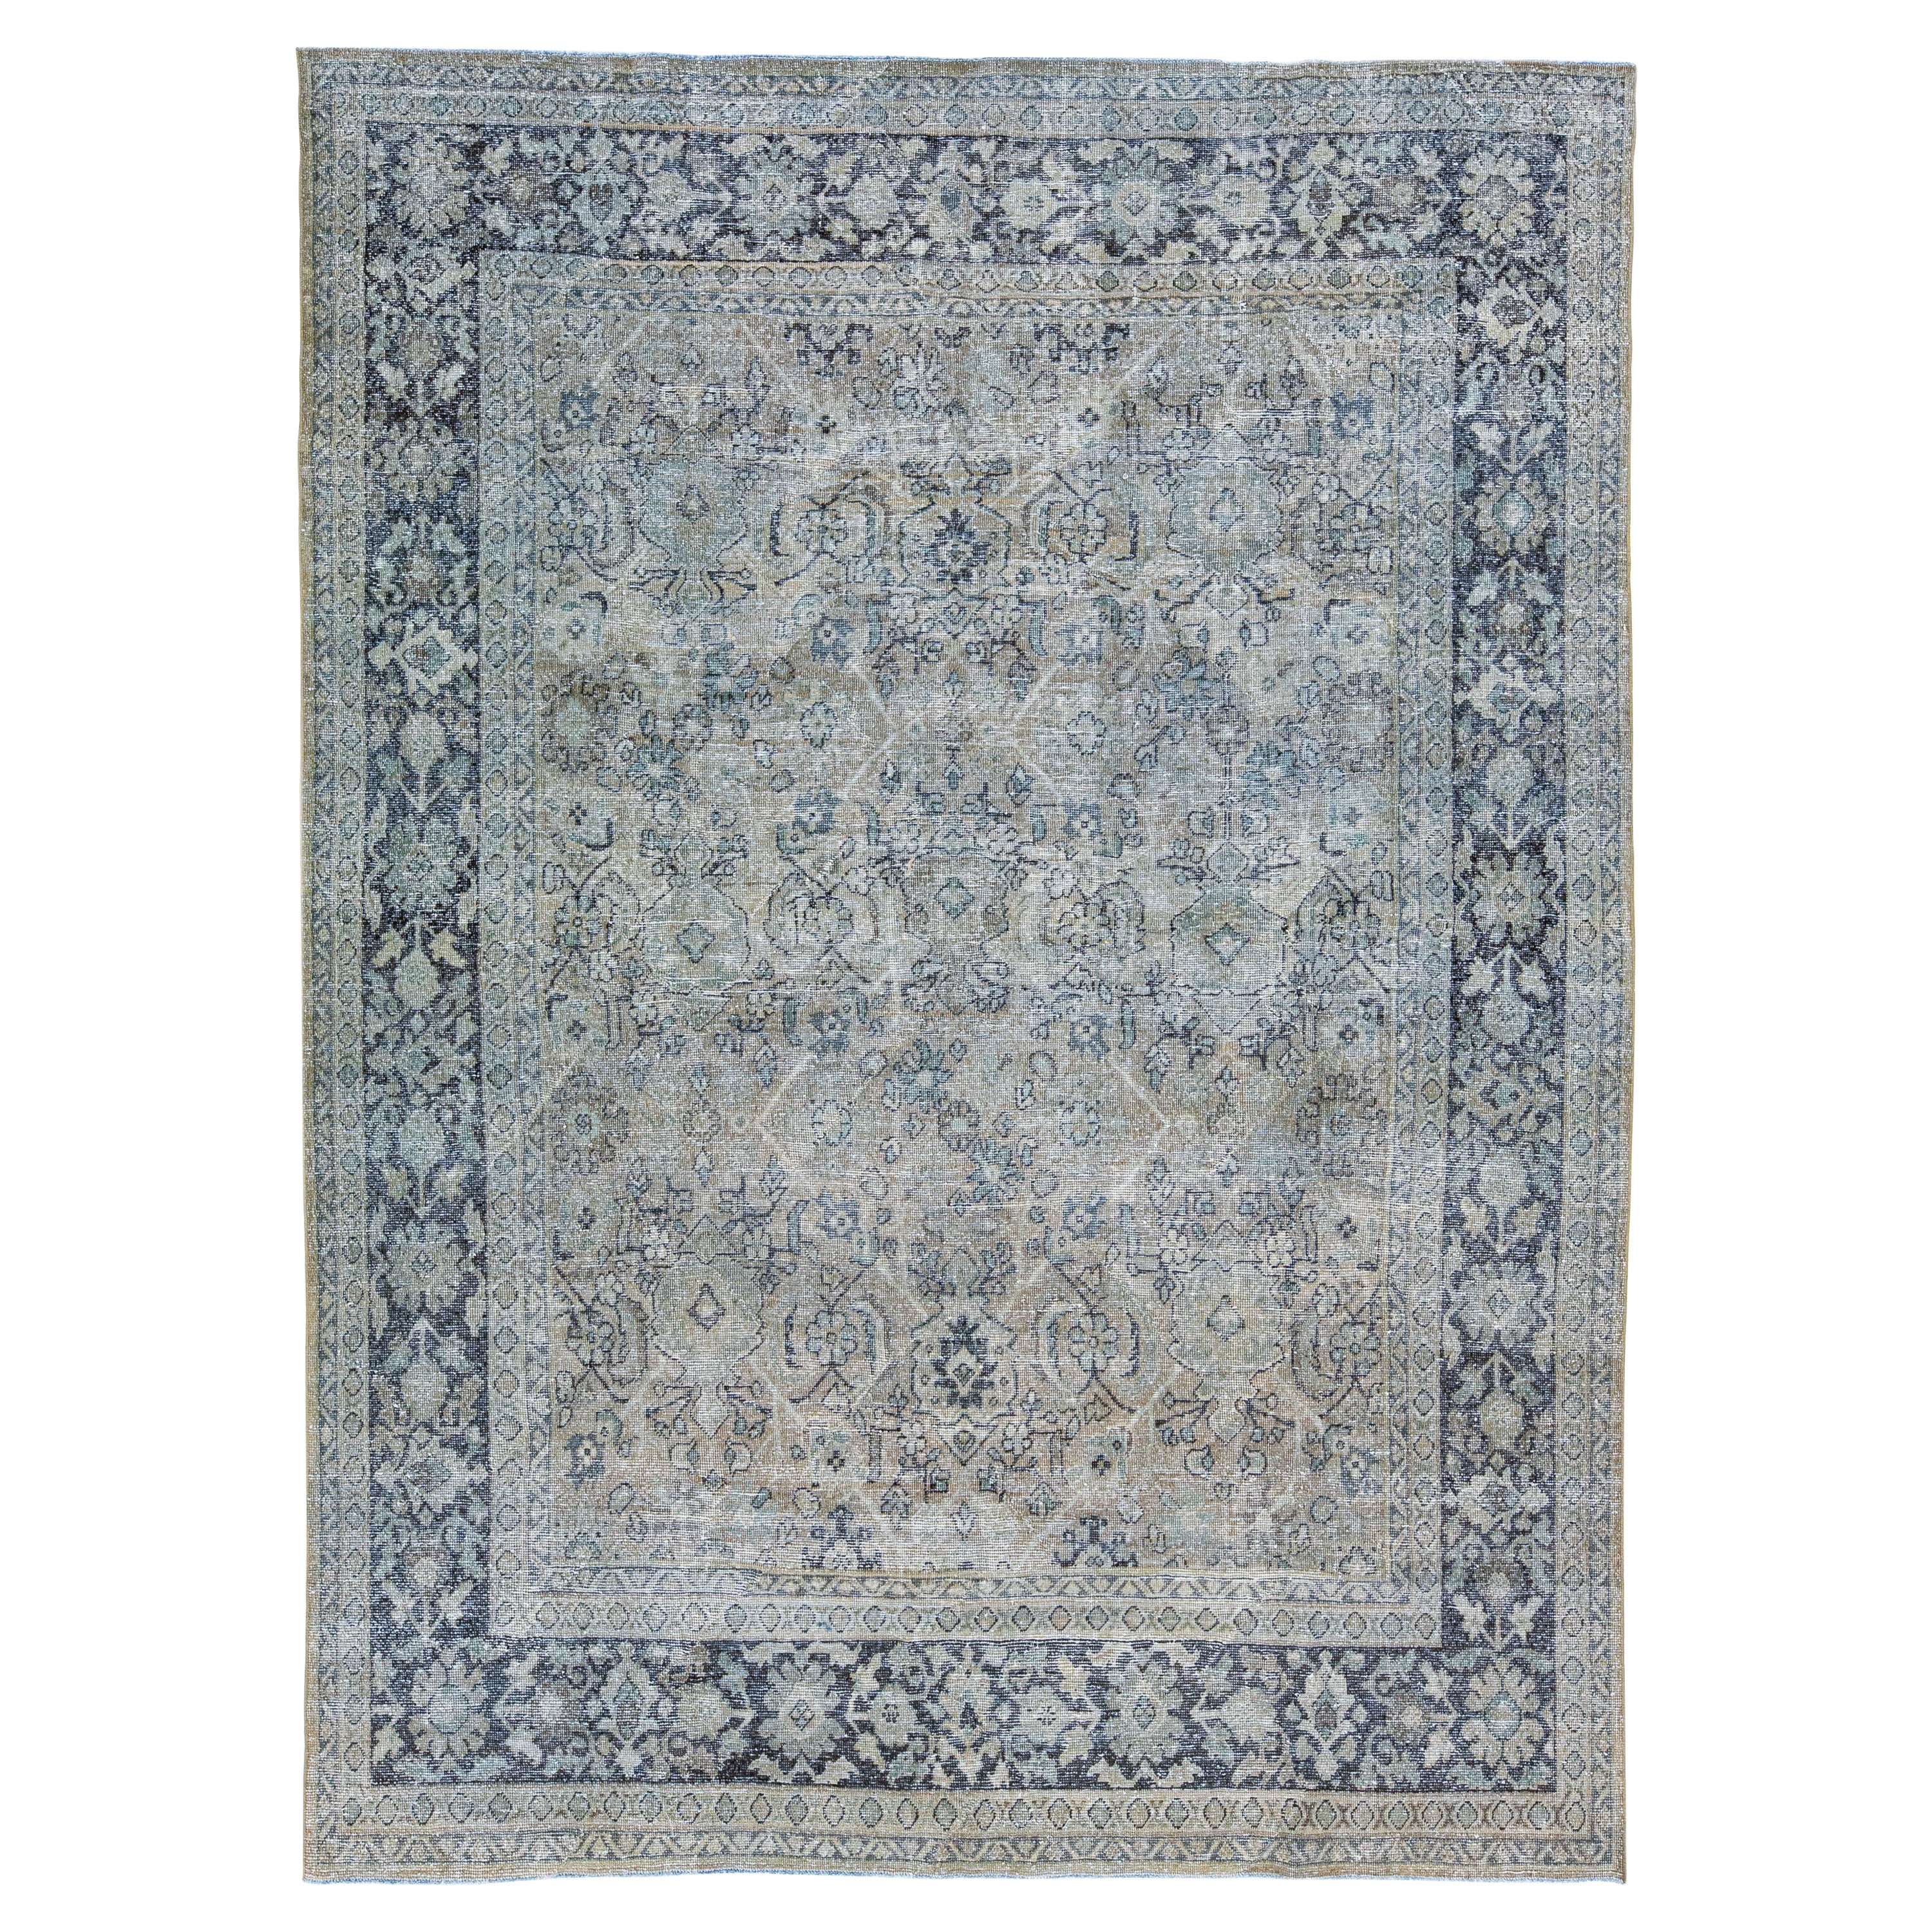 Antique Handmade Grey Persian Tabriz Wool Rug with Shah Abbasi Design